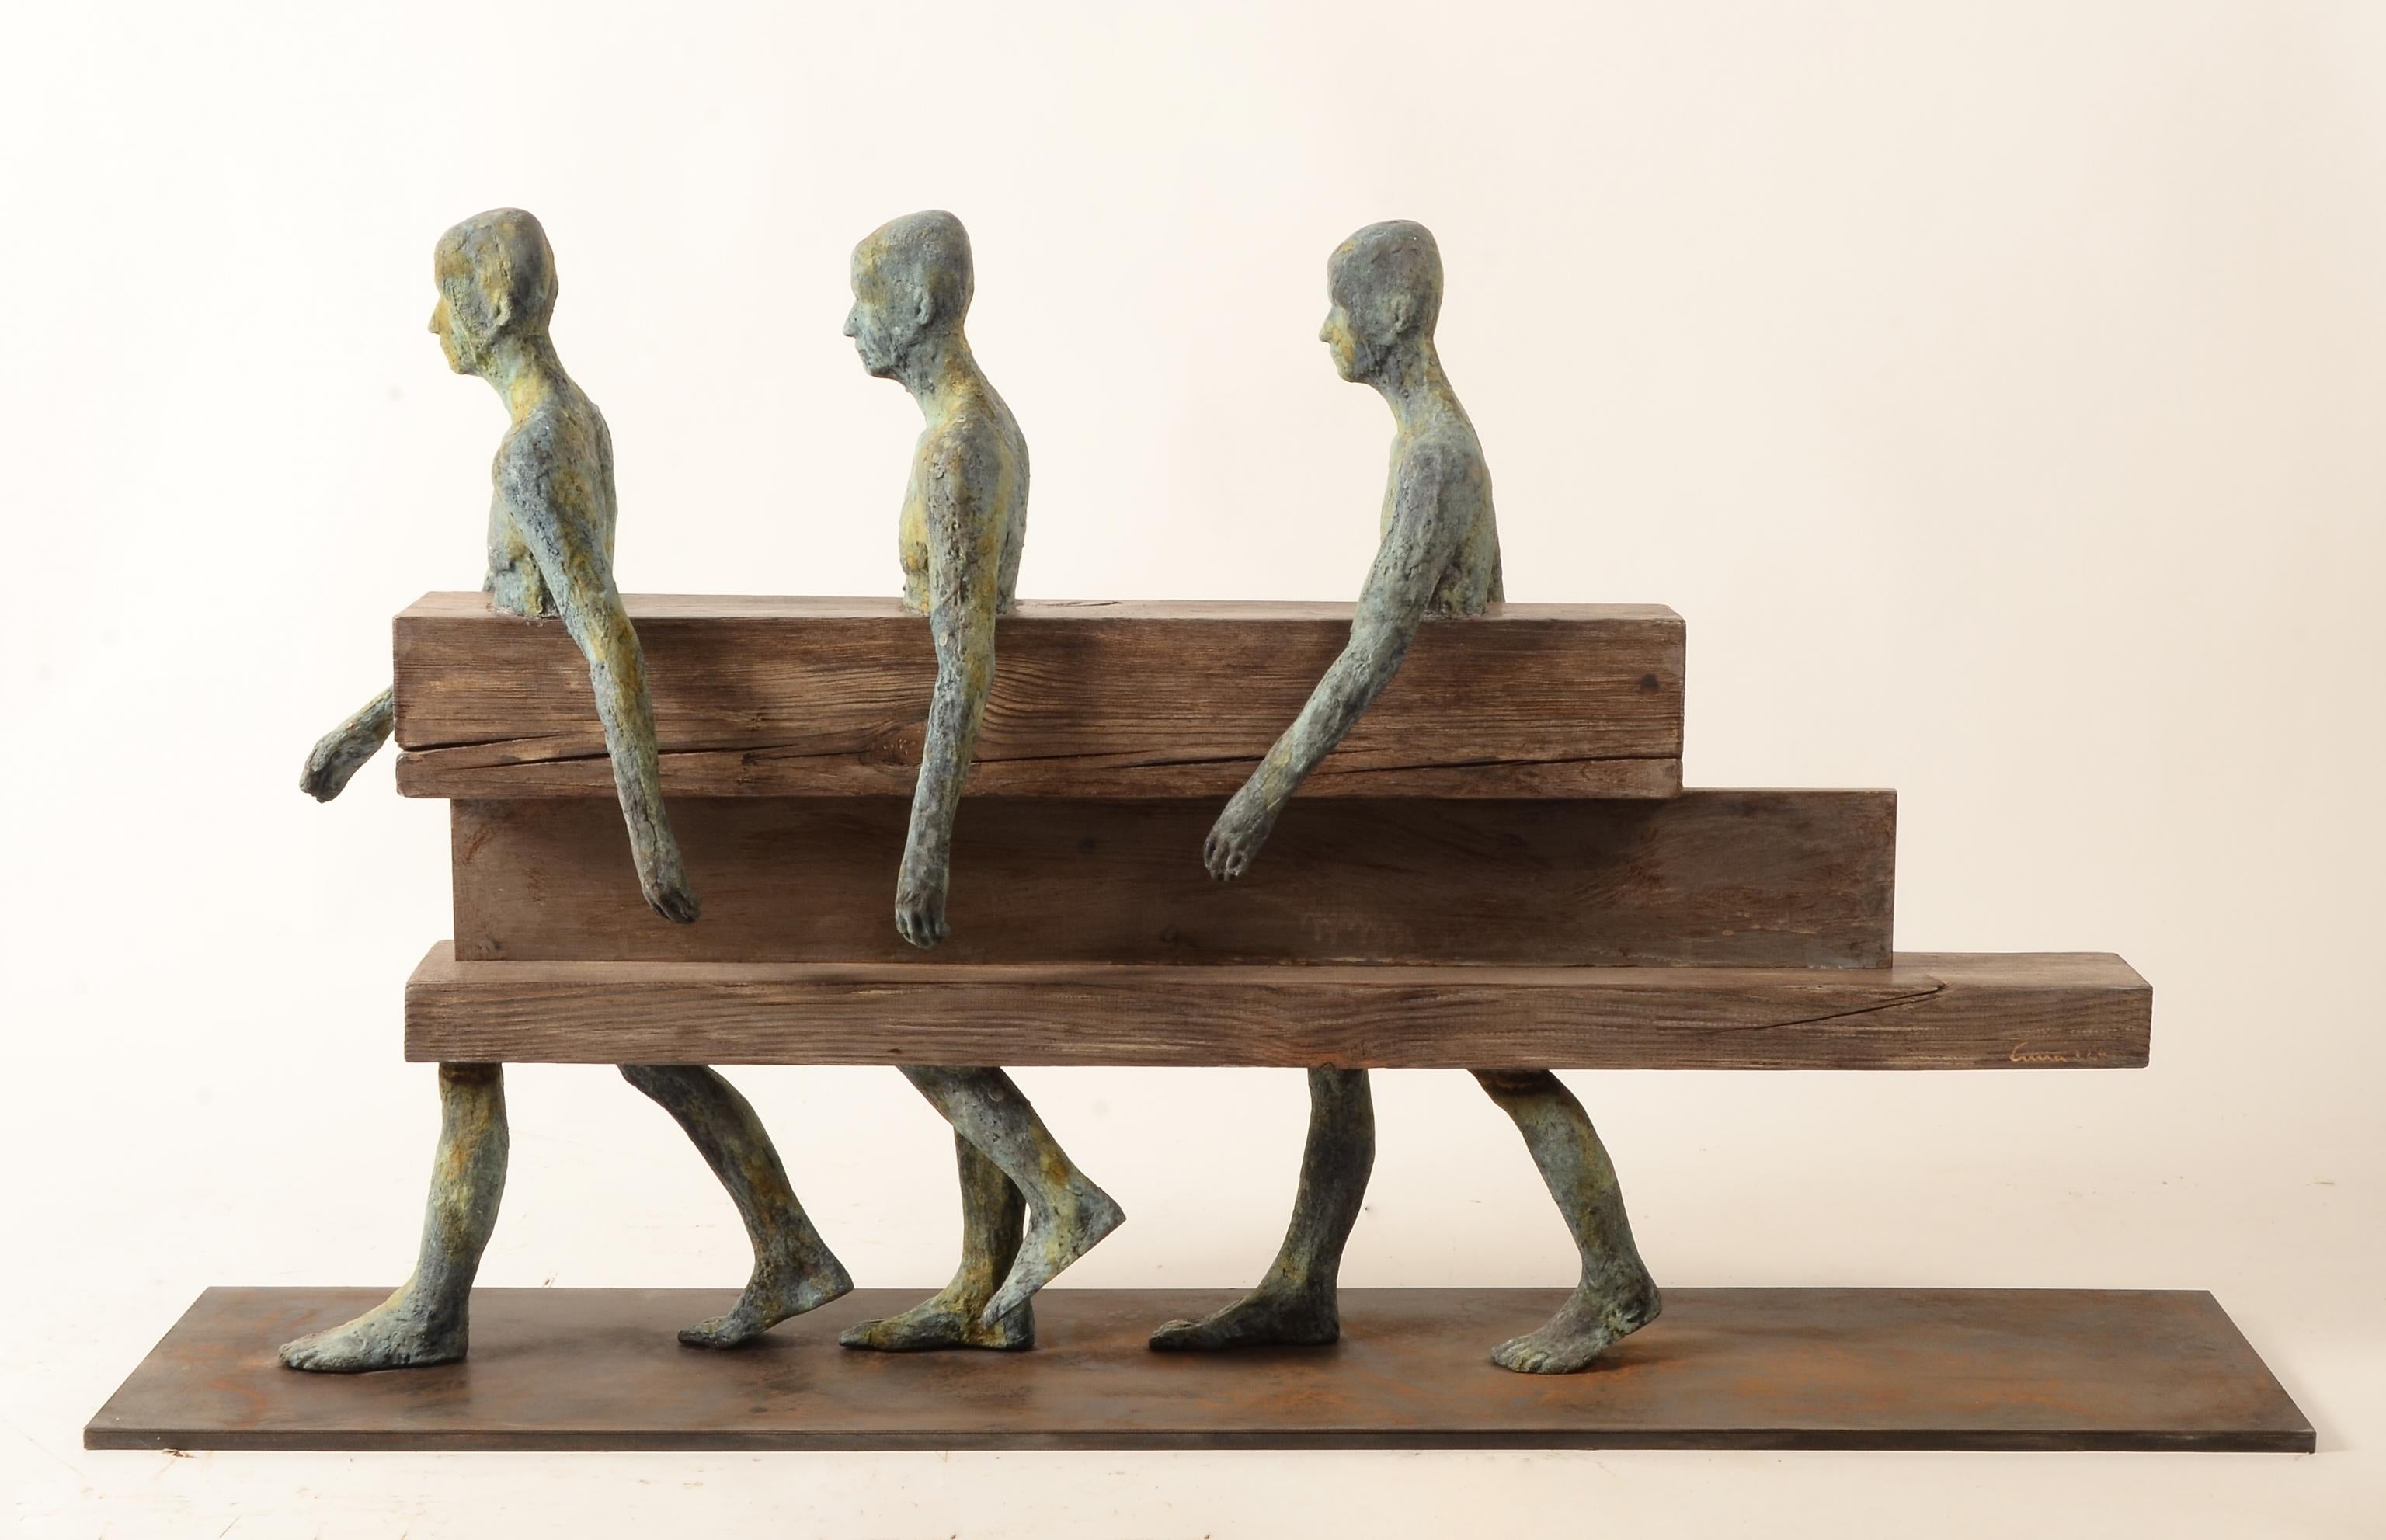 Jesus Curia Perez Abstract Sculpture - Caminantres - Bronze, Steel & Wood, Sculpture of Three Figures Walking in Tandem